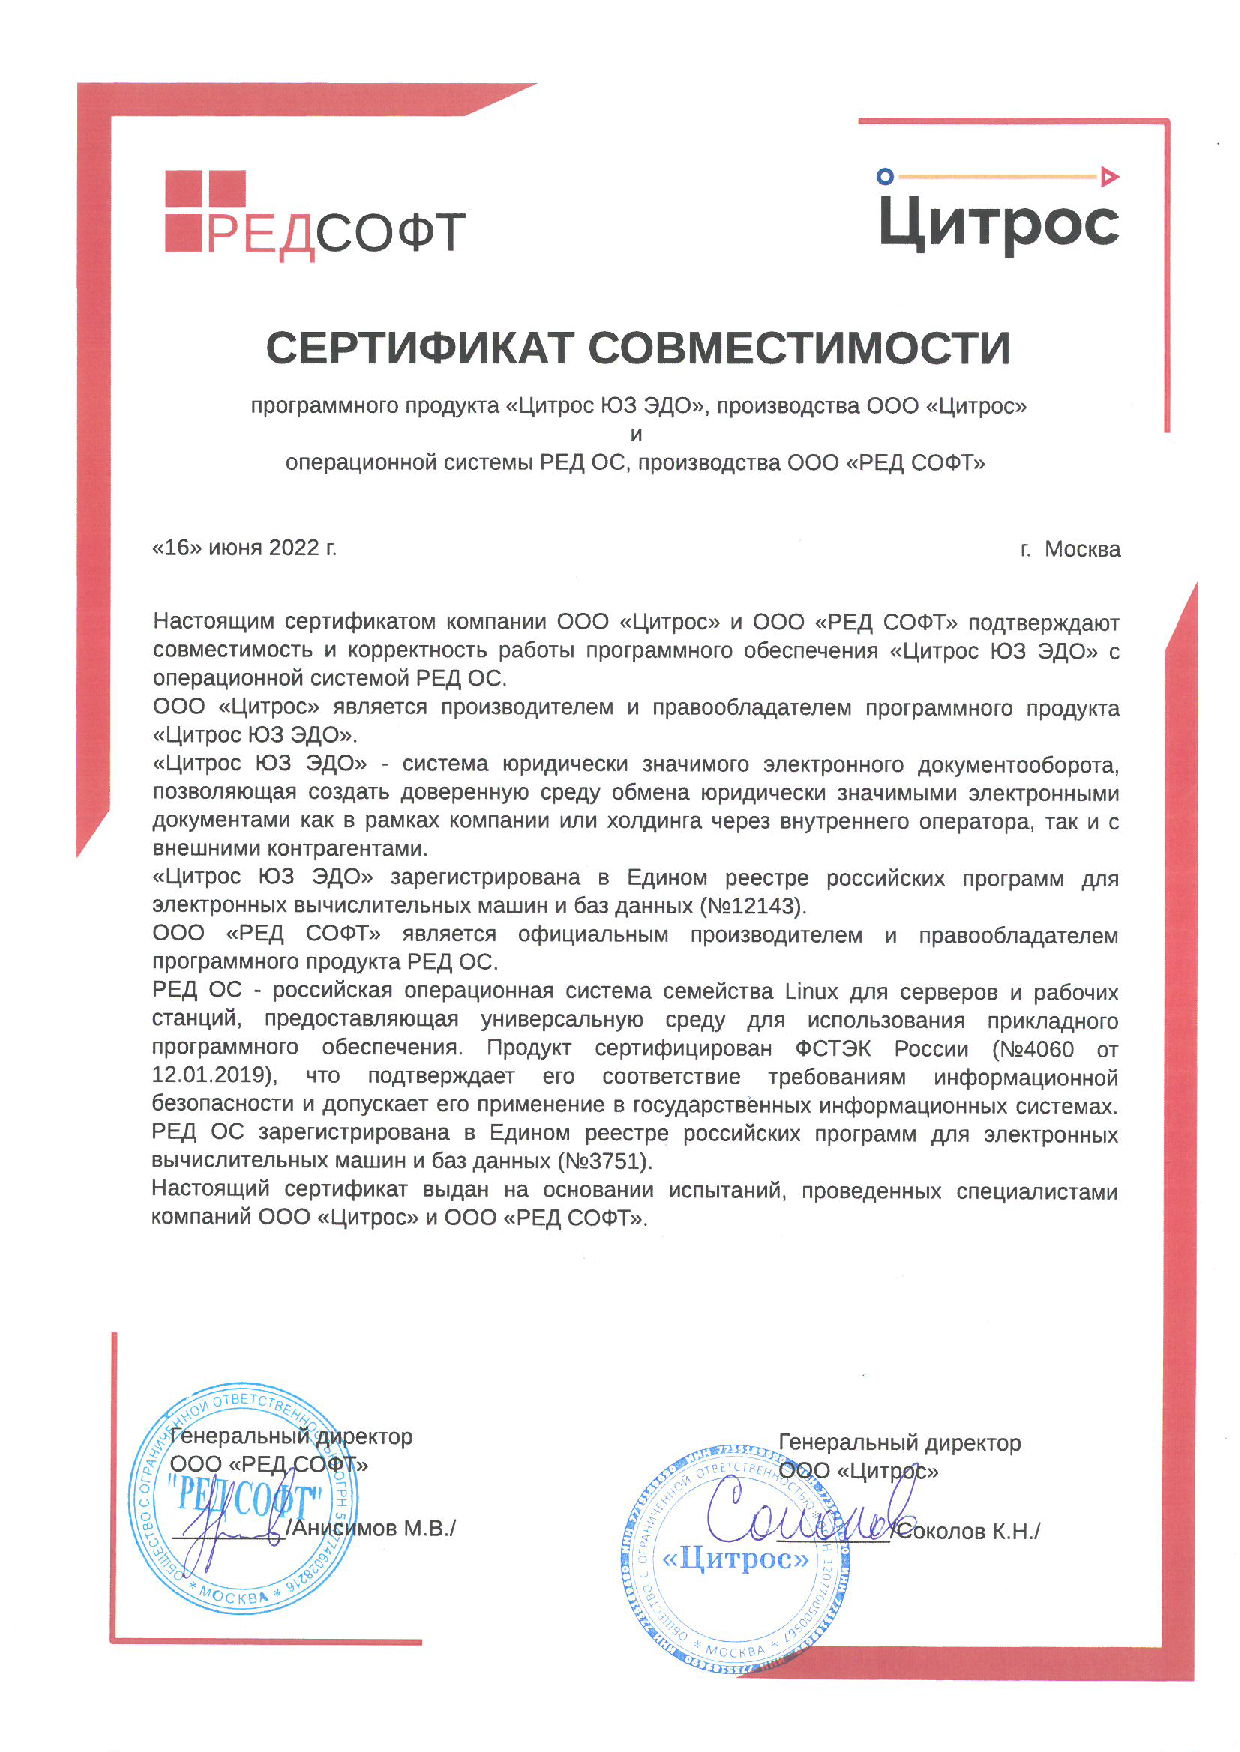 Сертификат совместимости «Цитрос ЮЗ ЭДО» и «РЕД ОС» 